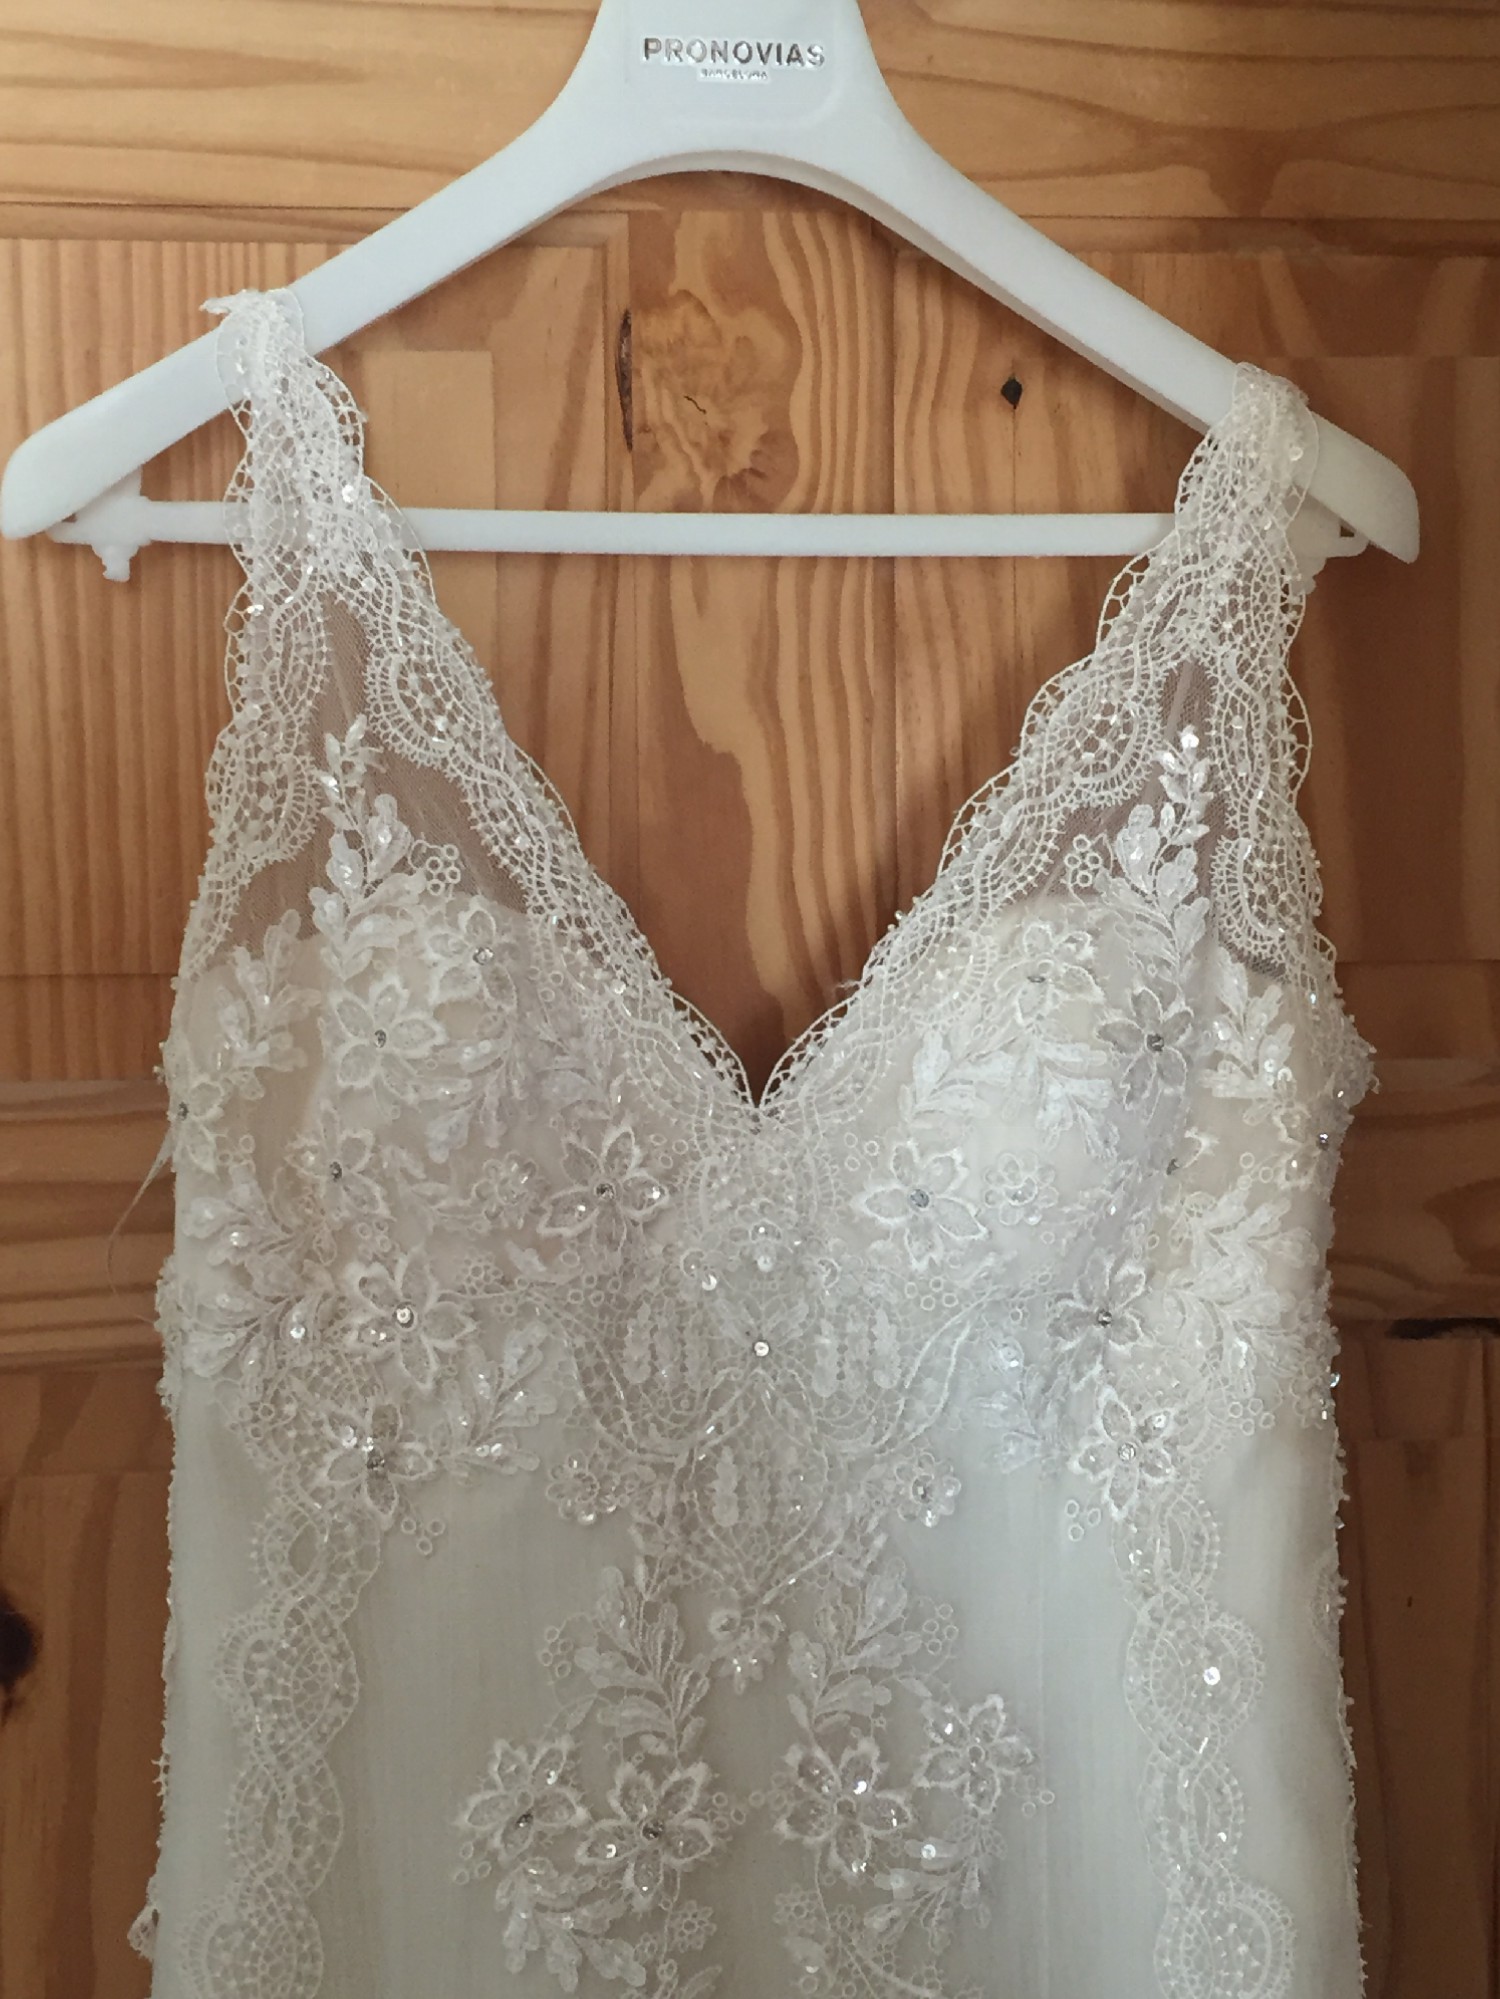 Pronovias New Wedding Dress on Sale 73% Off - Stillwhite